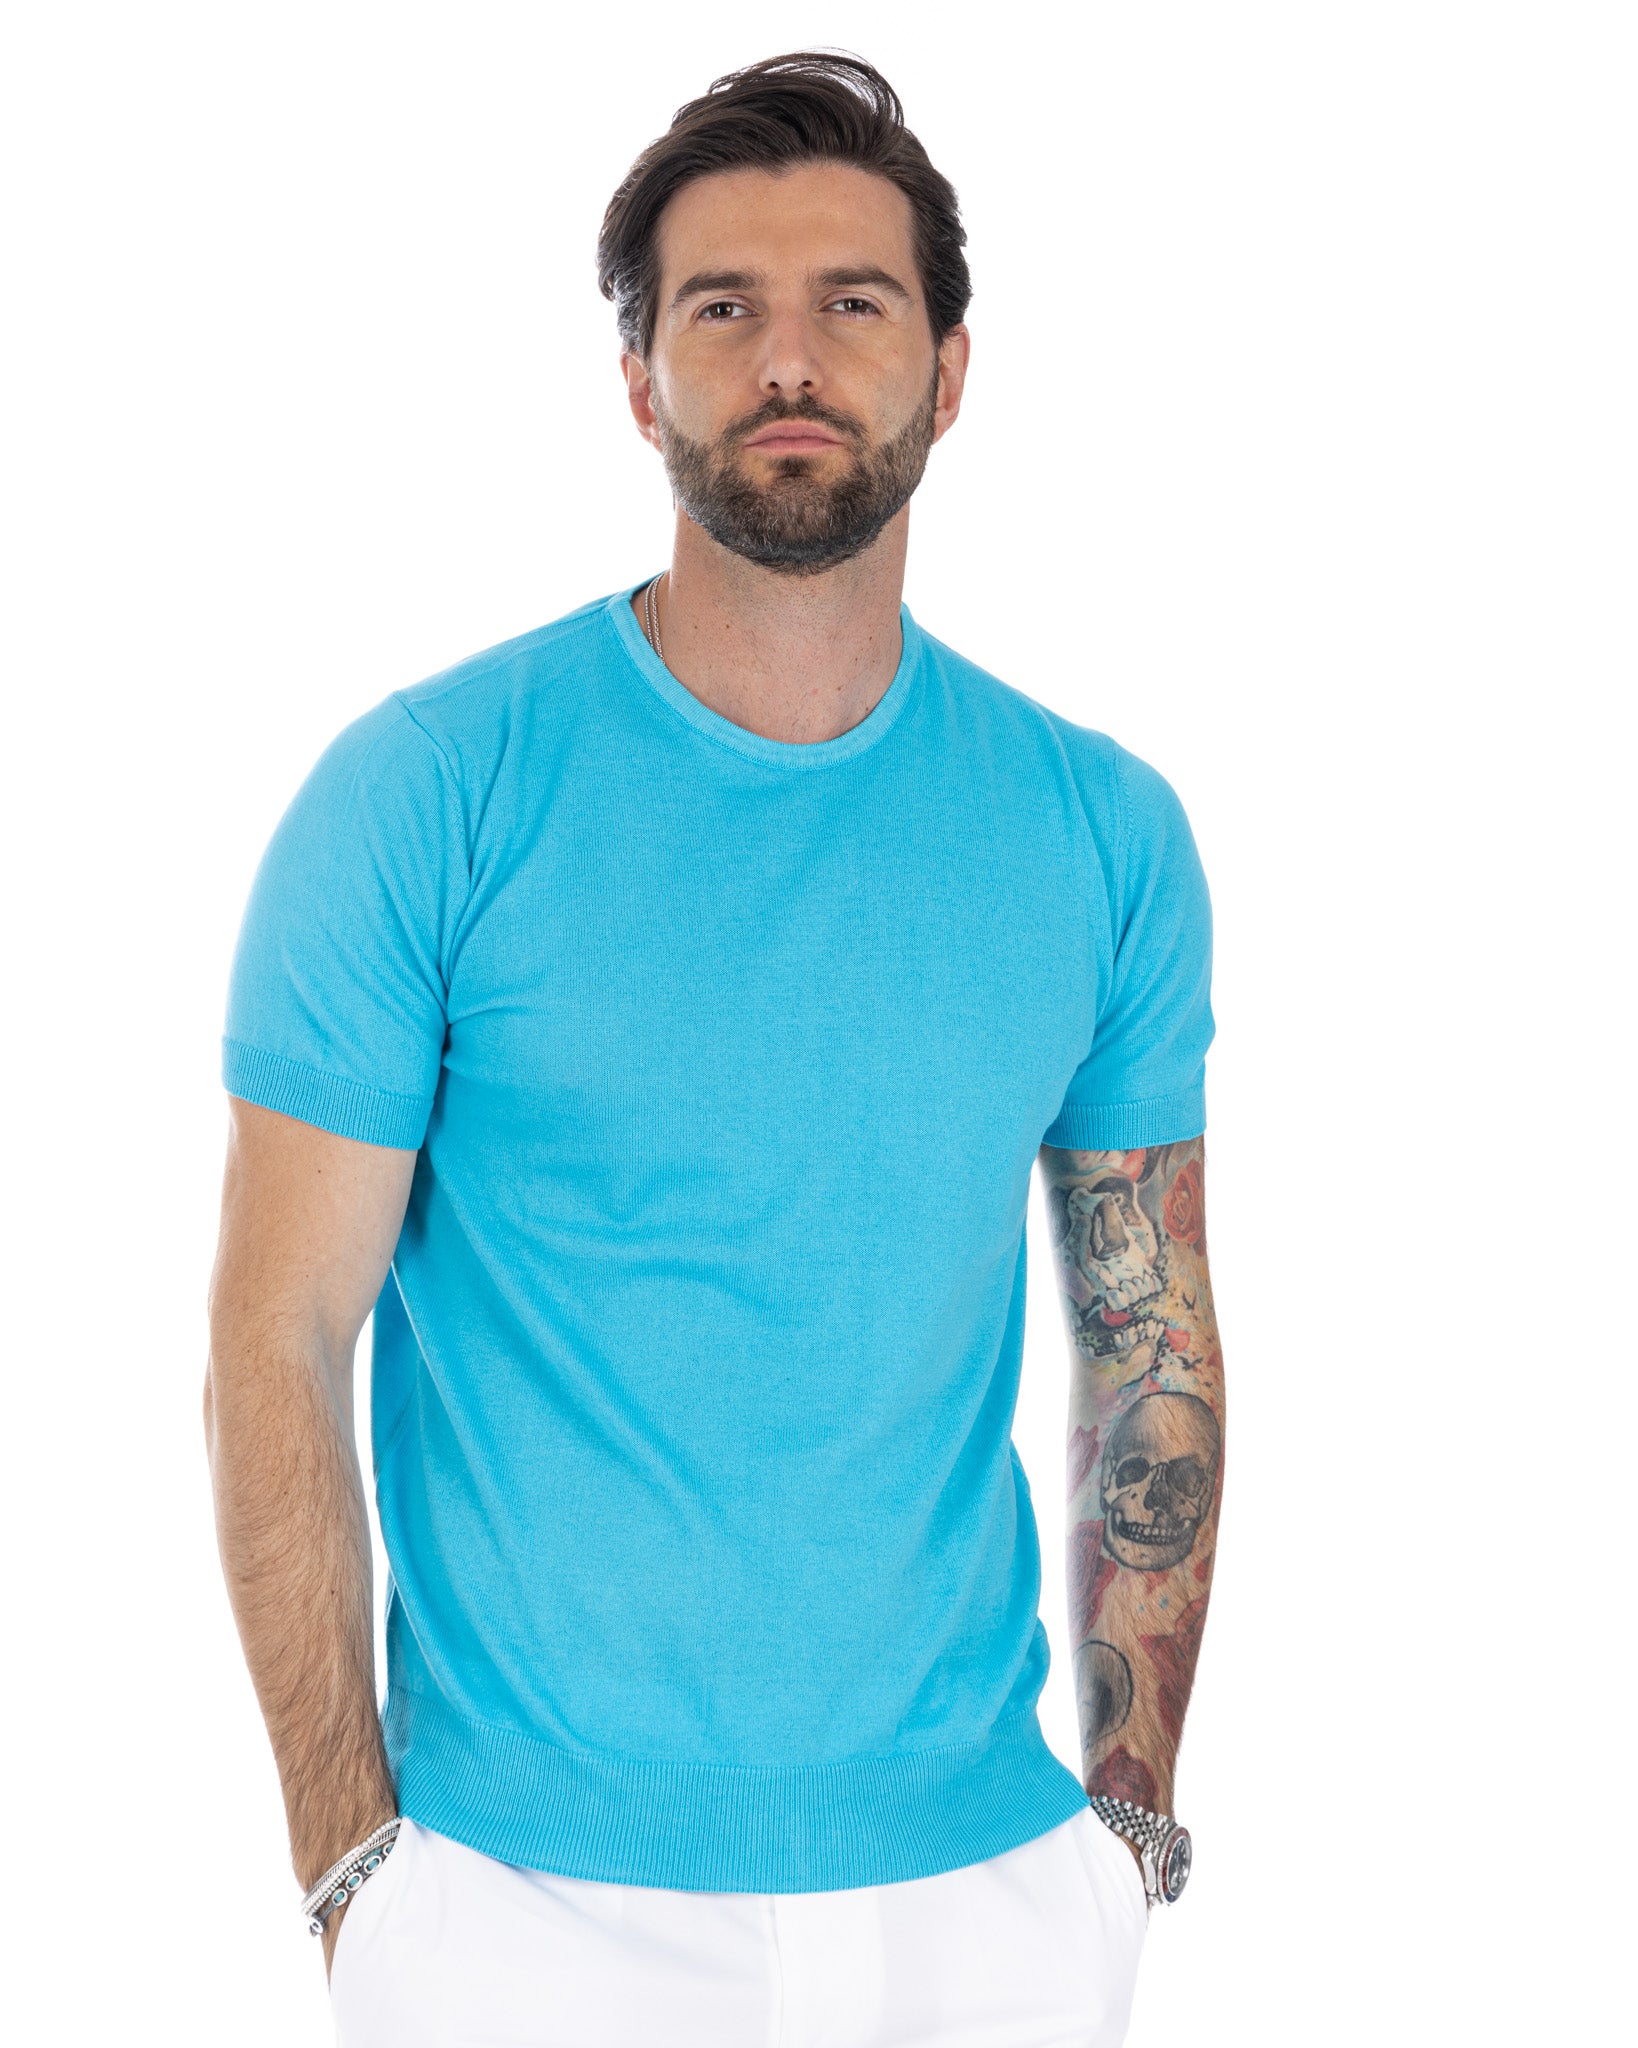 Jannik - turquoise knitted t-shirt